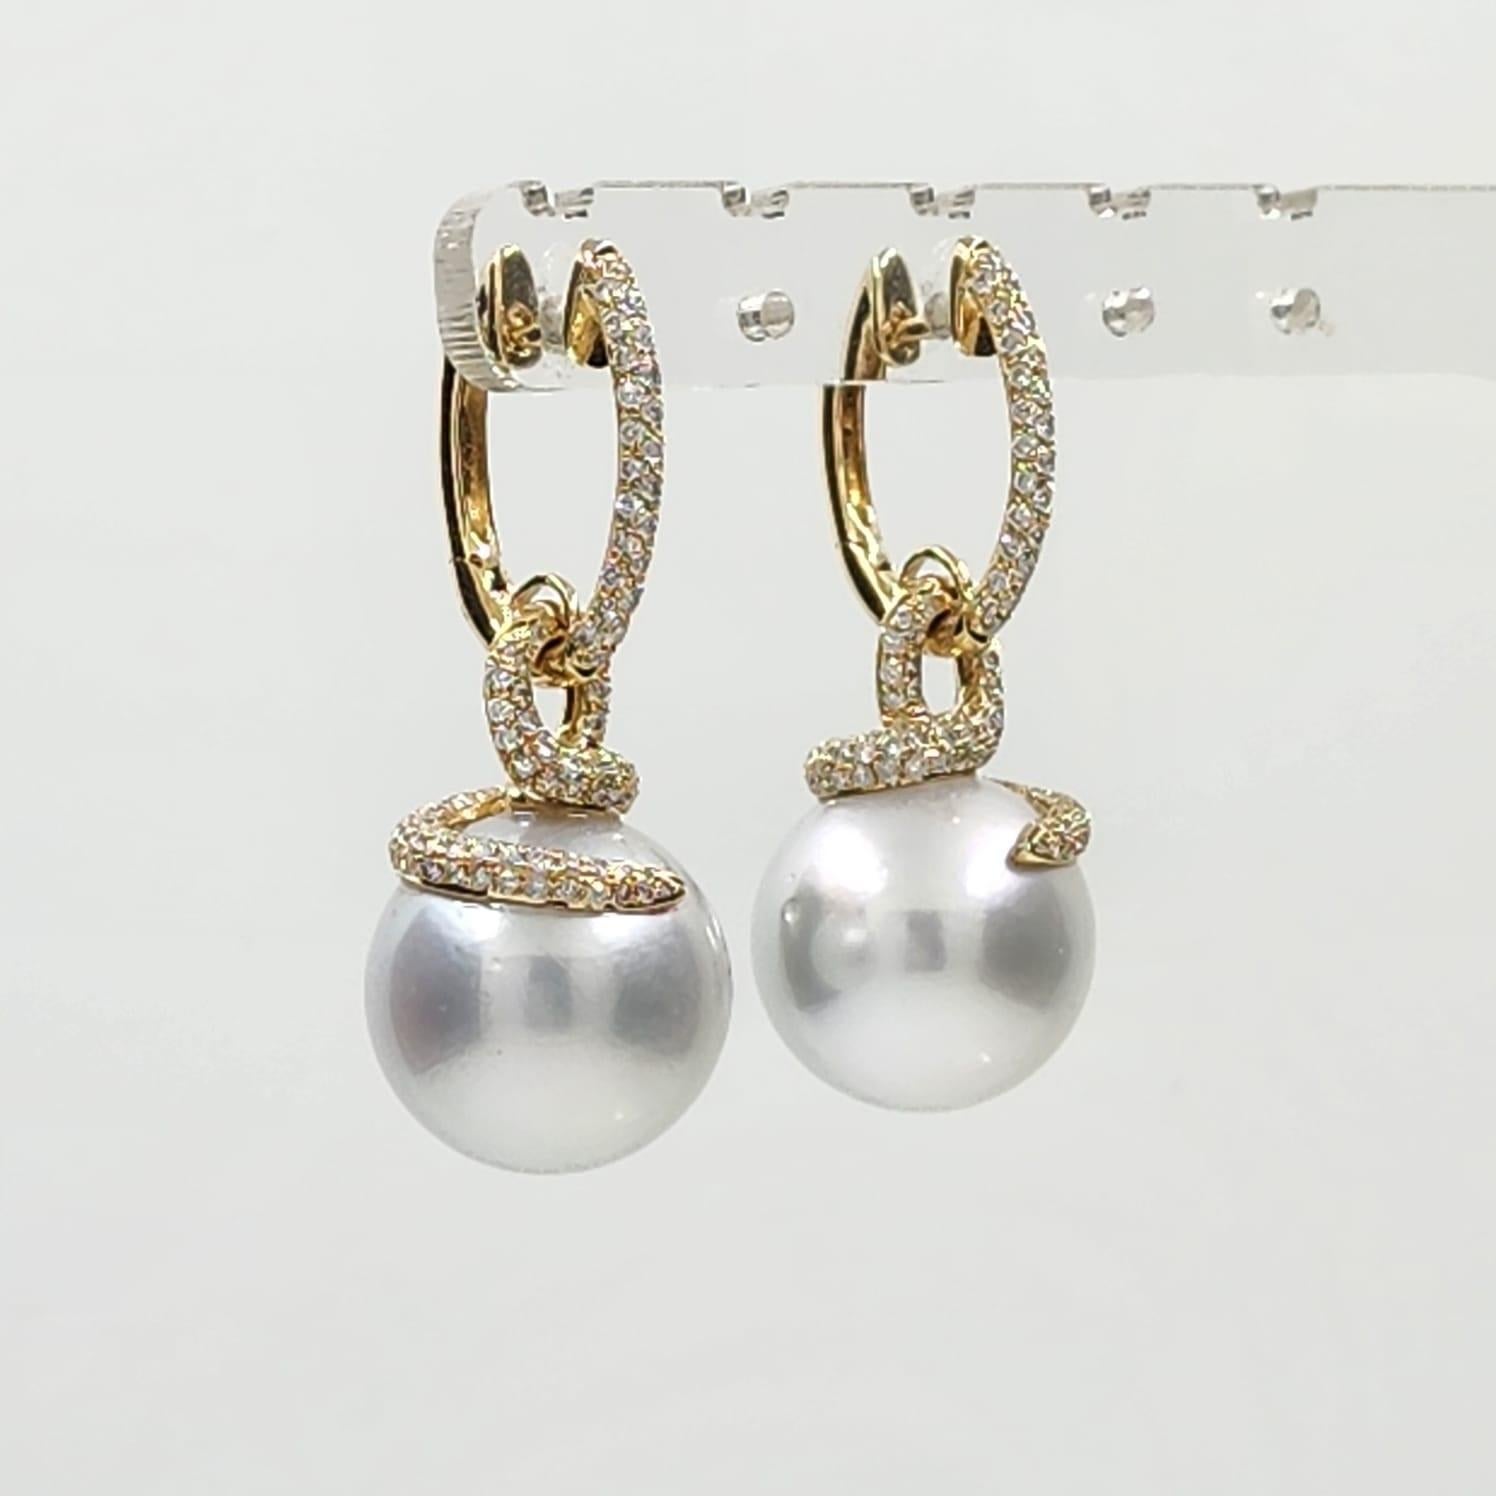 13.5 x 16mm Oval South Sea Pearl Diamond Dangle Earrings in 14 Karat Yellow Gold For Sale 1